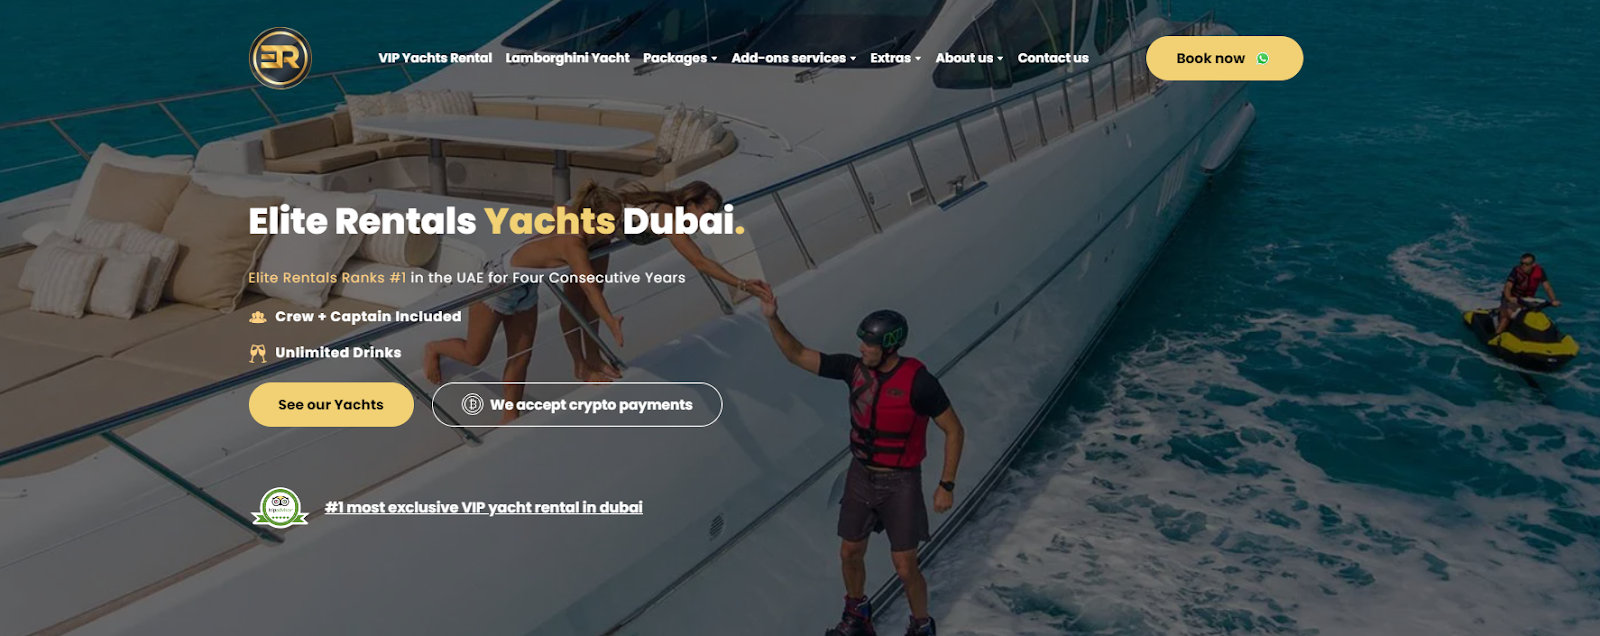 luxury-yacht-rental-dubai-yacht-charter-elite-rentals